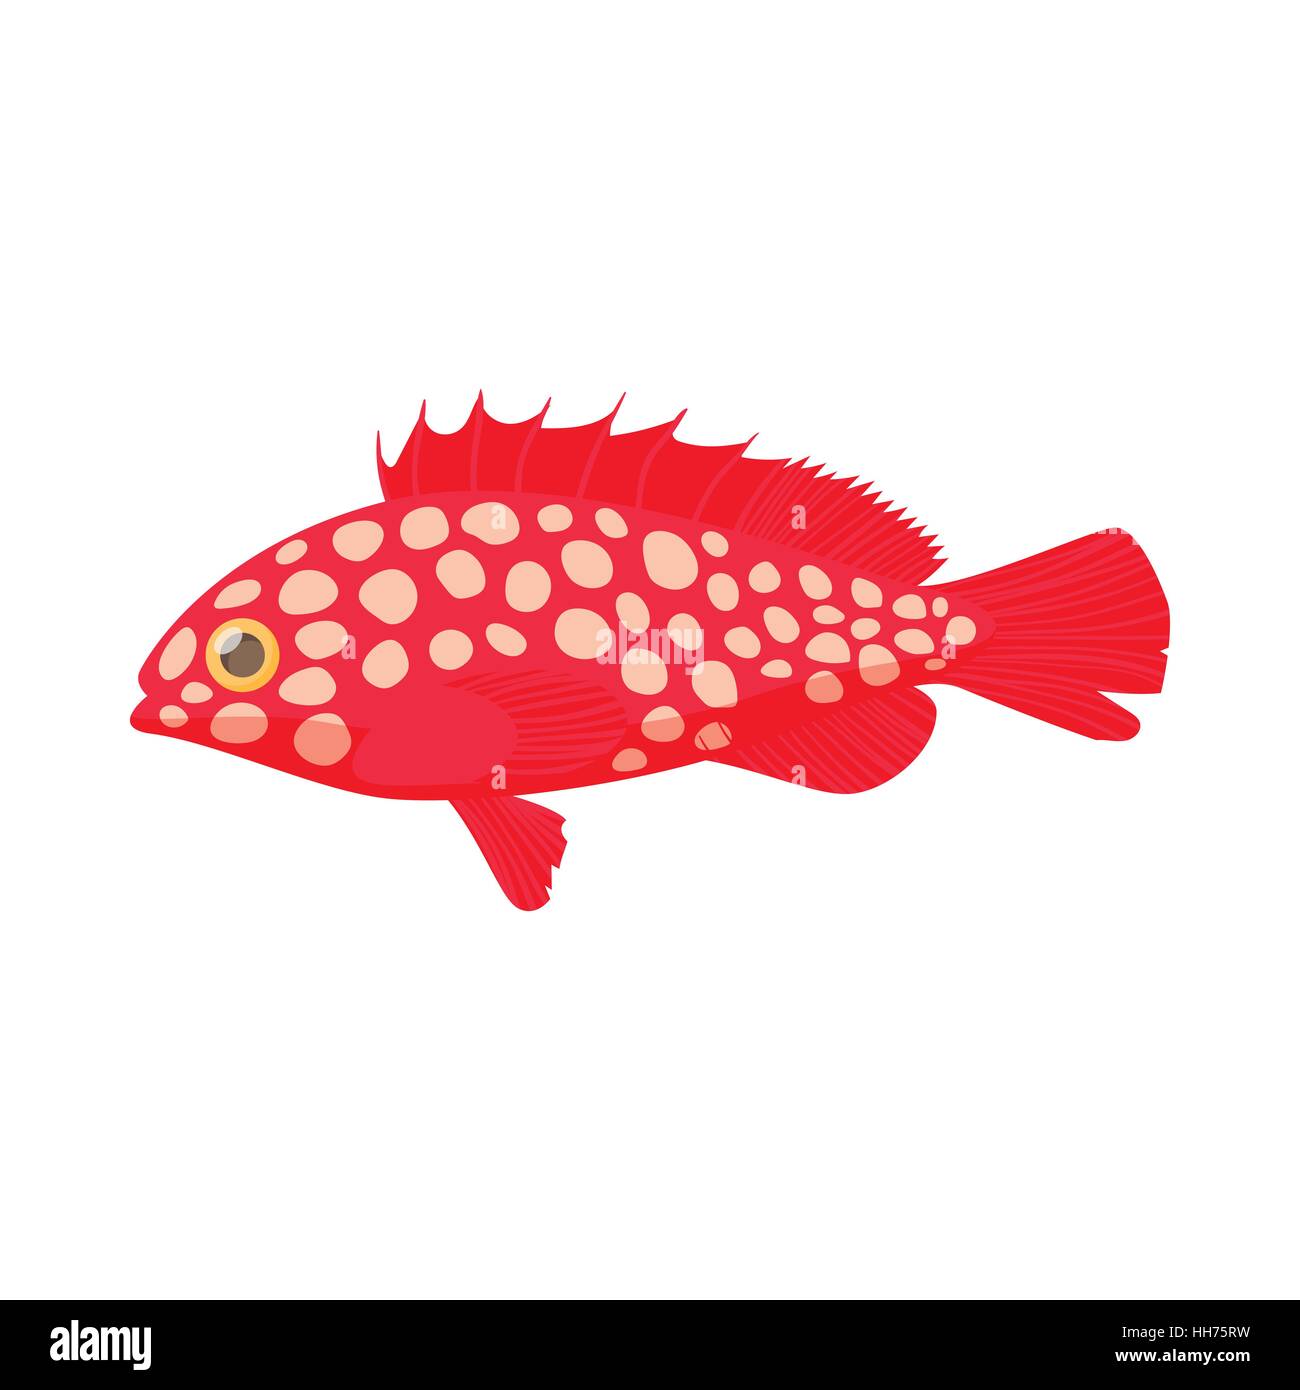 Hemichromis fish icon, cartoon style Stock Vector